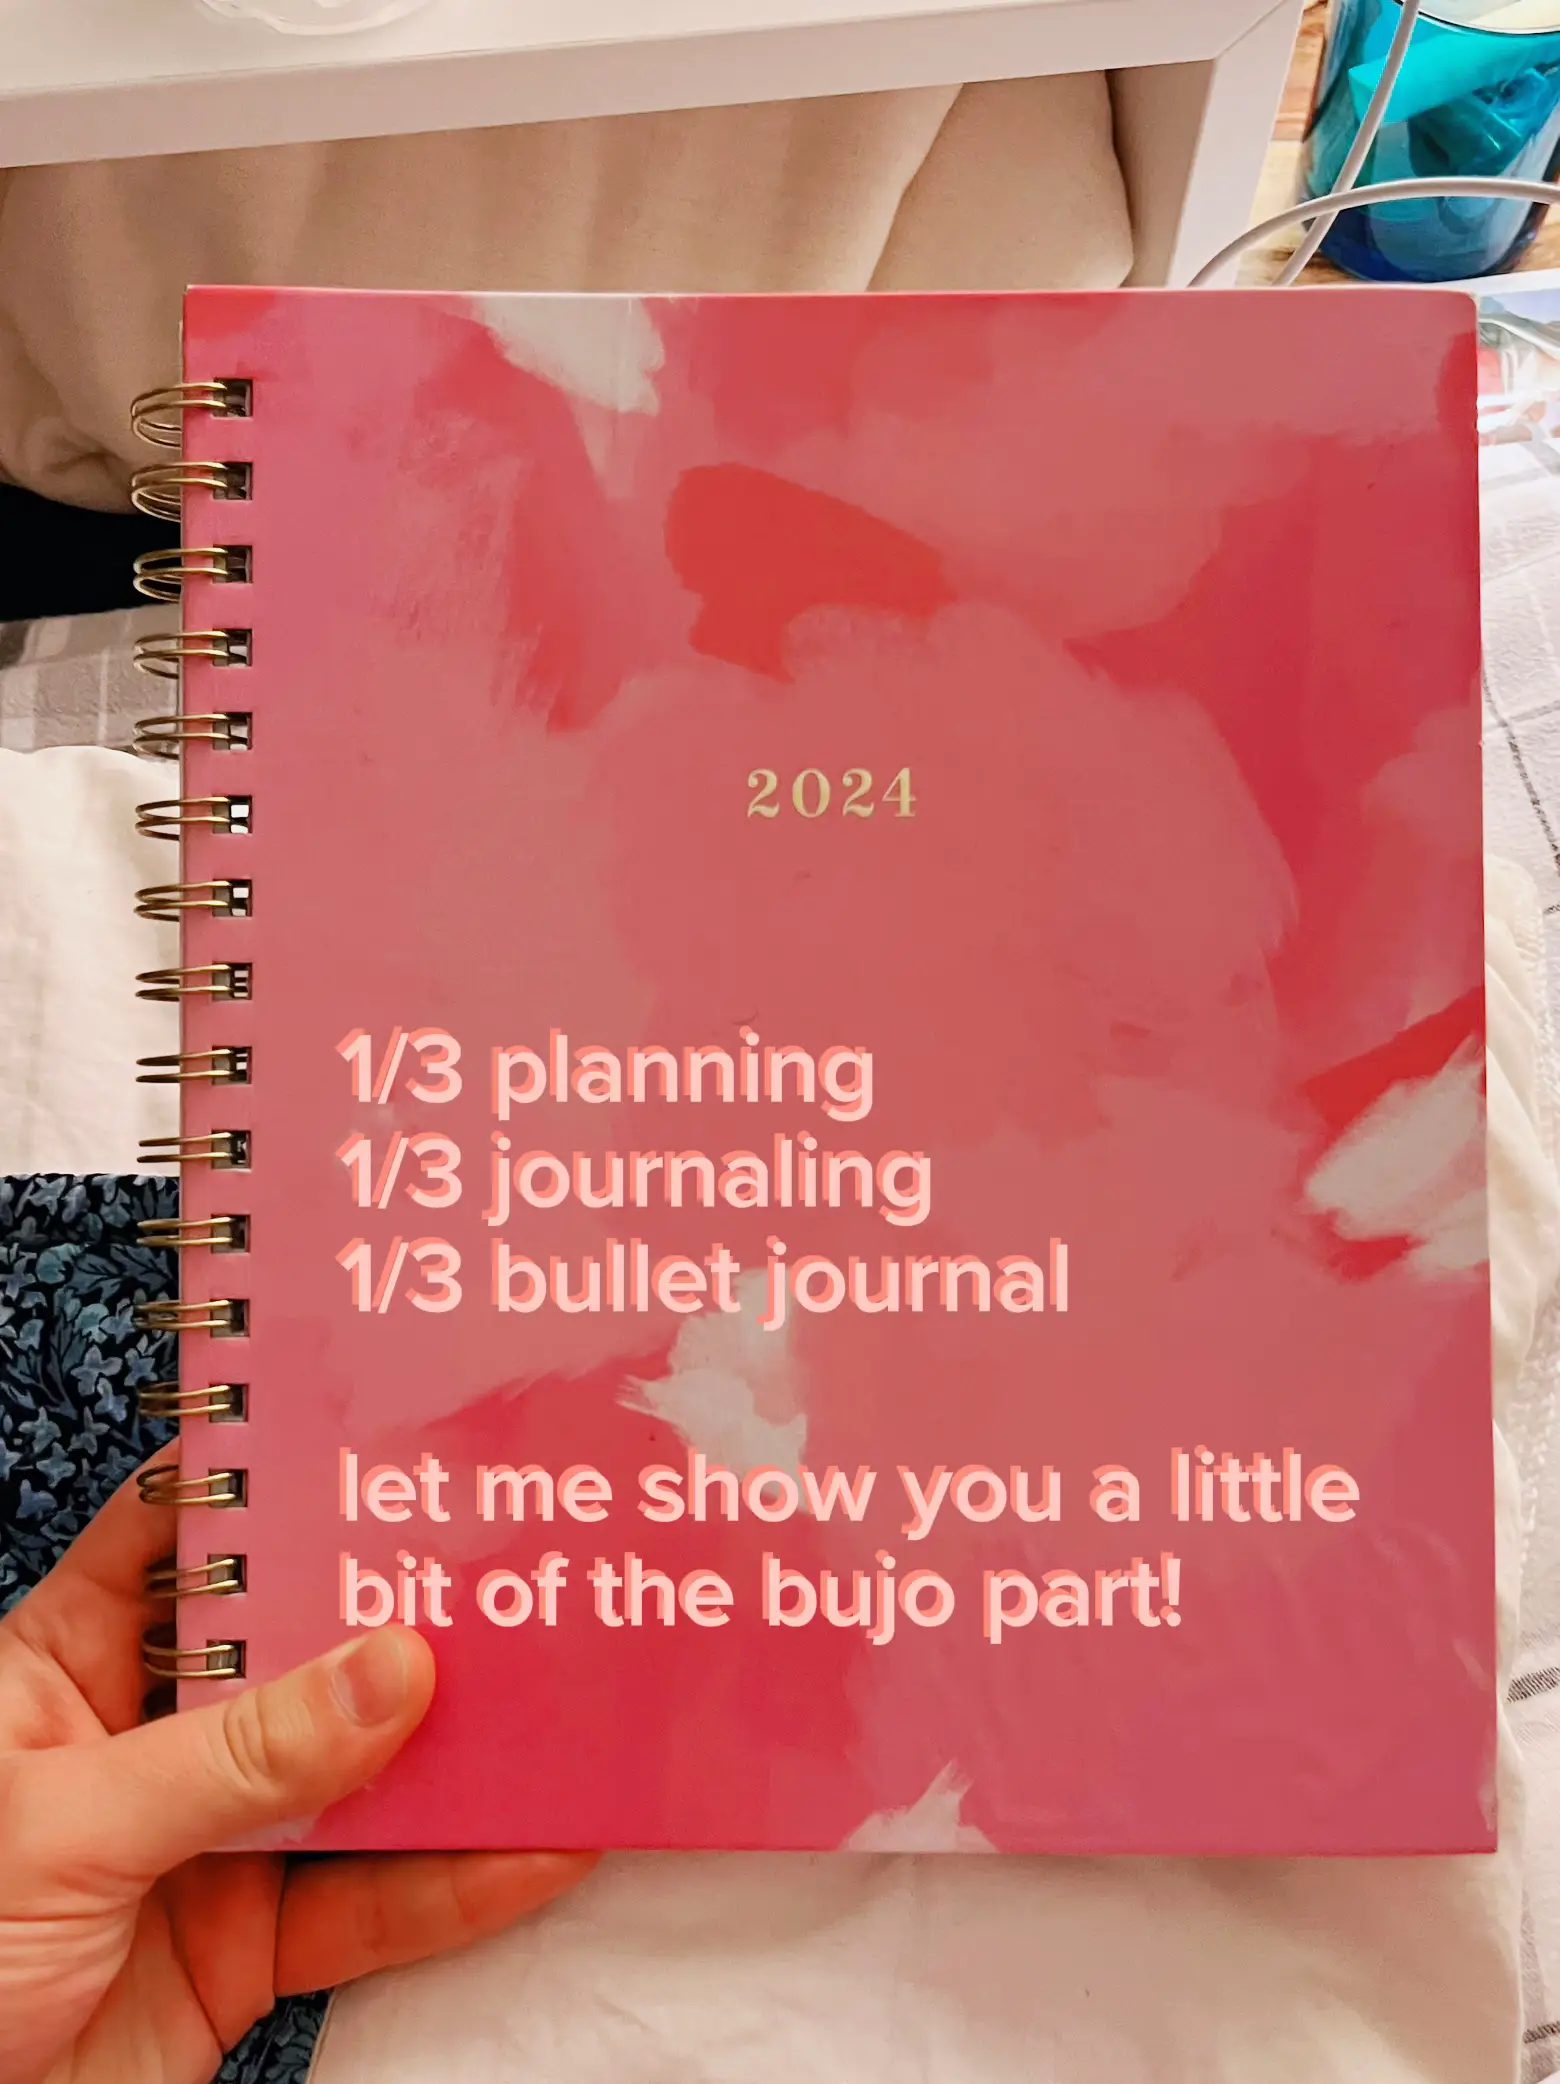 2023-2024 Fresh Yearly Setup  Digital Bullet Journal Theme